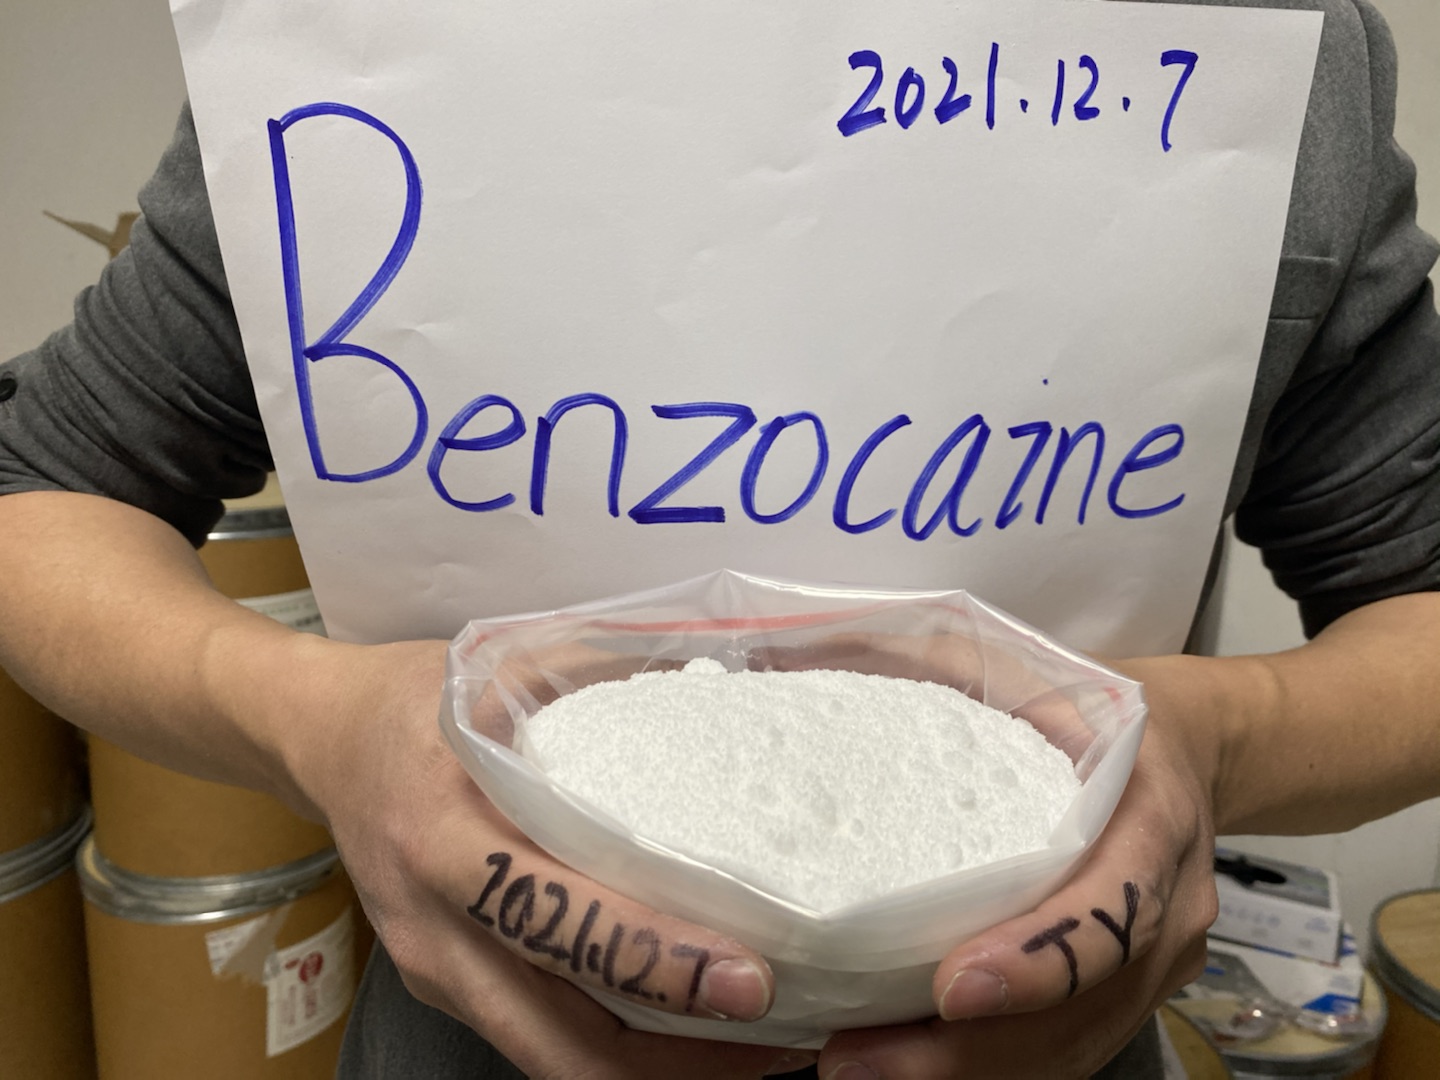 99% pure Benzocaine/Benzocaina hloride powder with USP/BP standard  